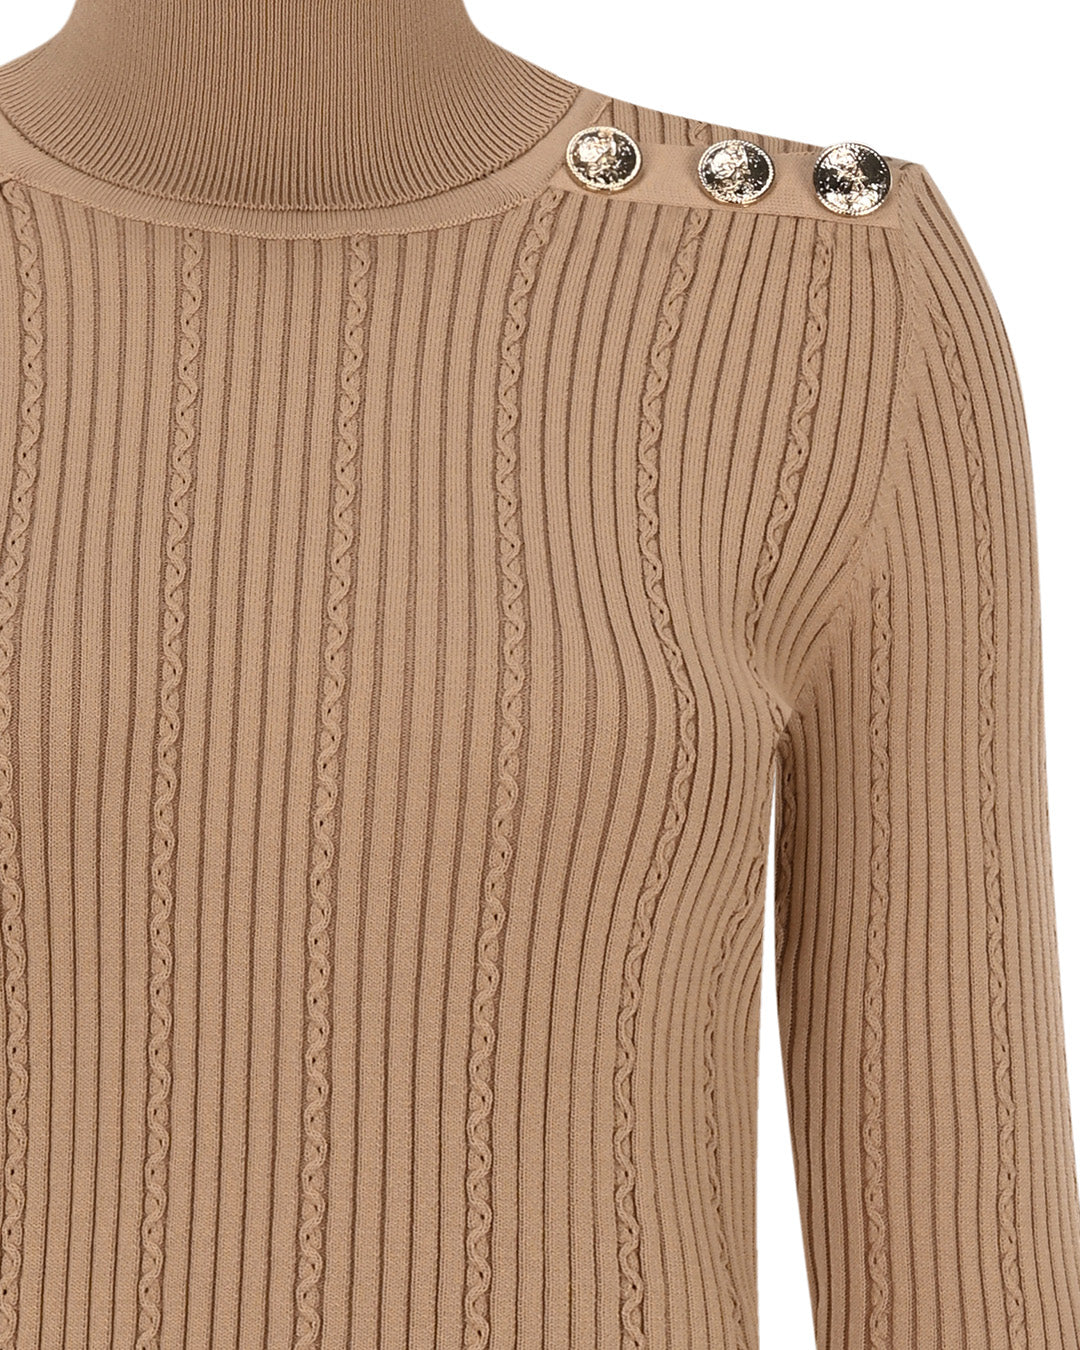 Turtleneck Button Detailed Knitwear Sweater